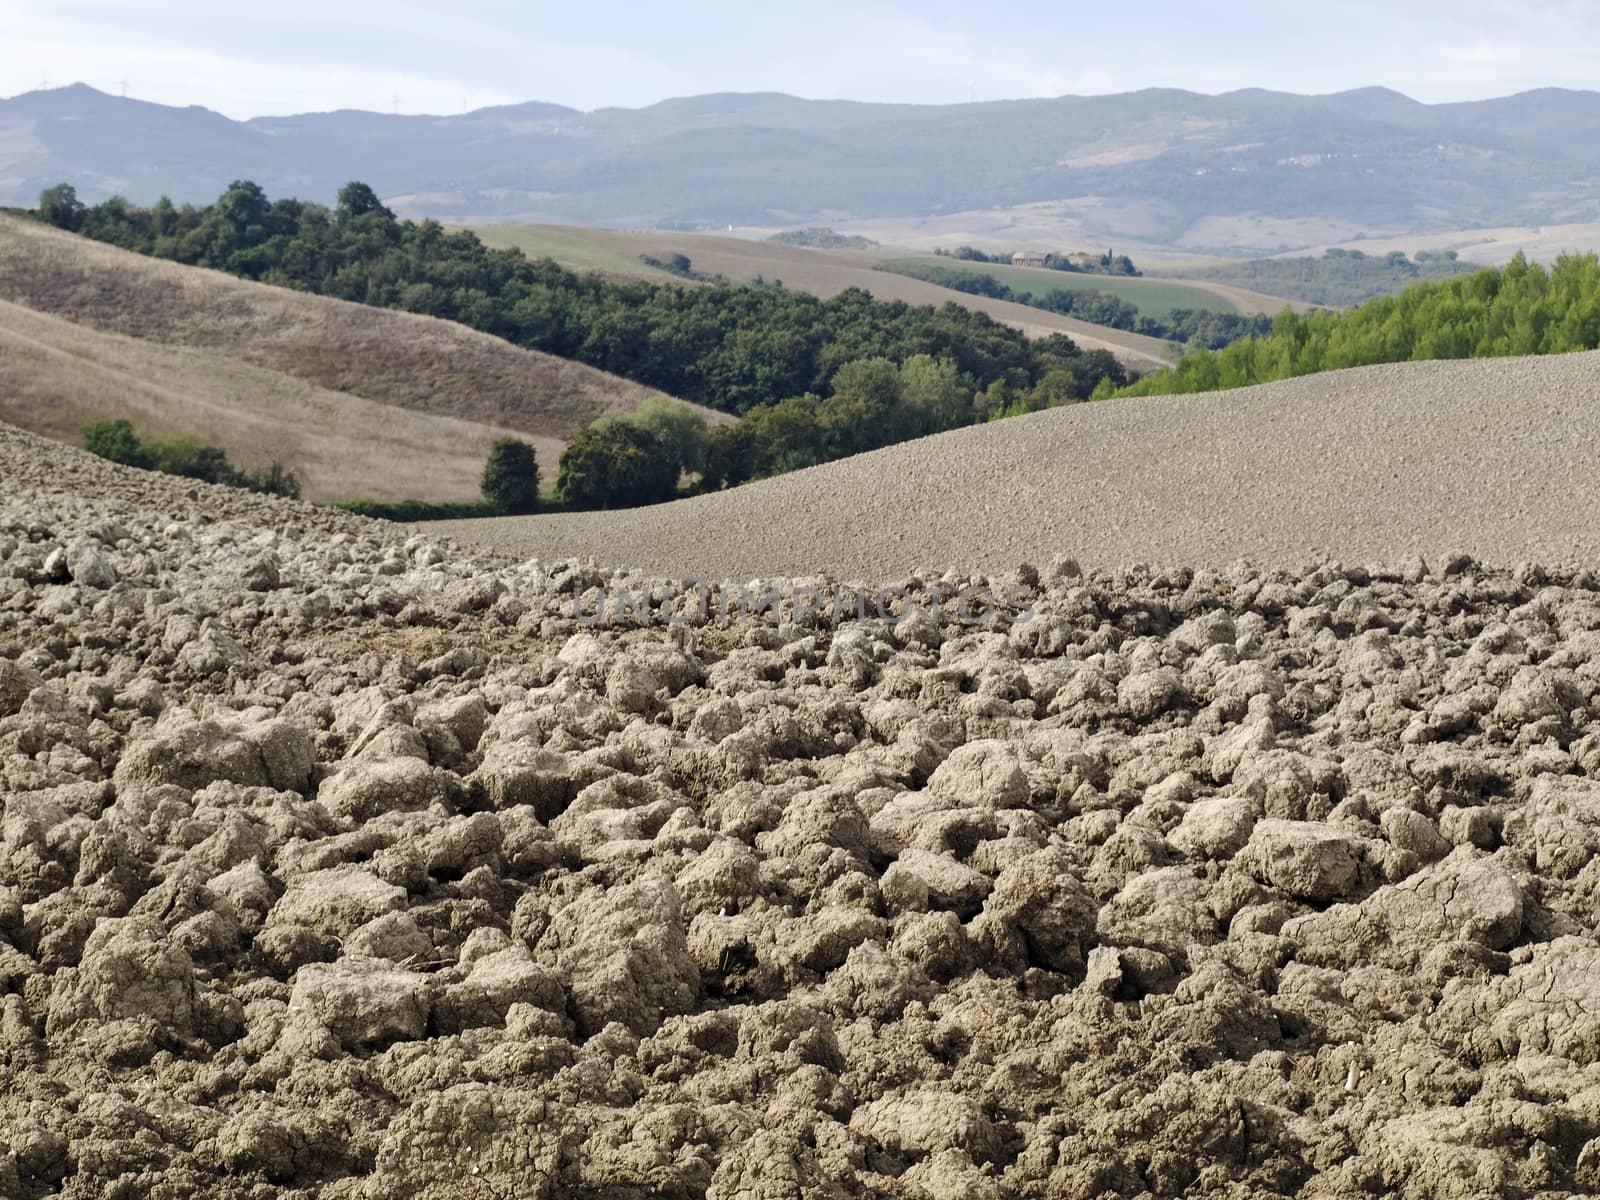 plowed field in tuscany